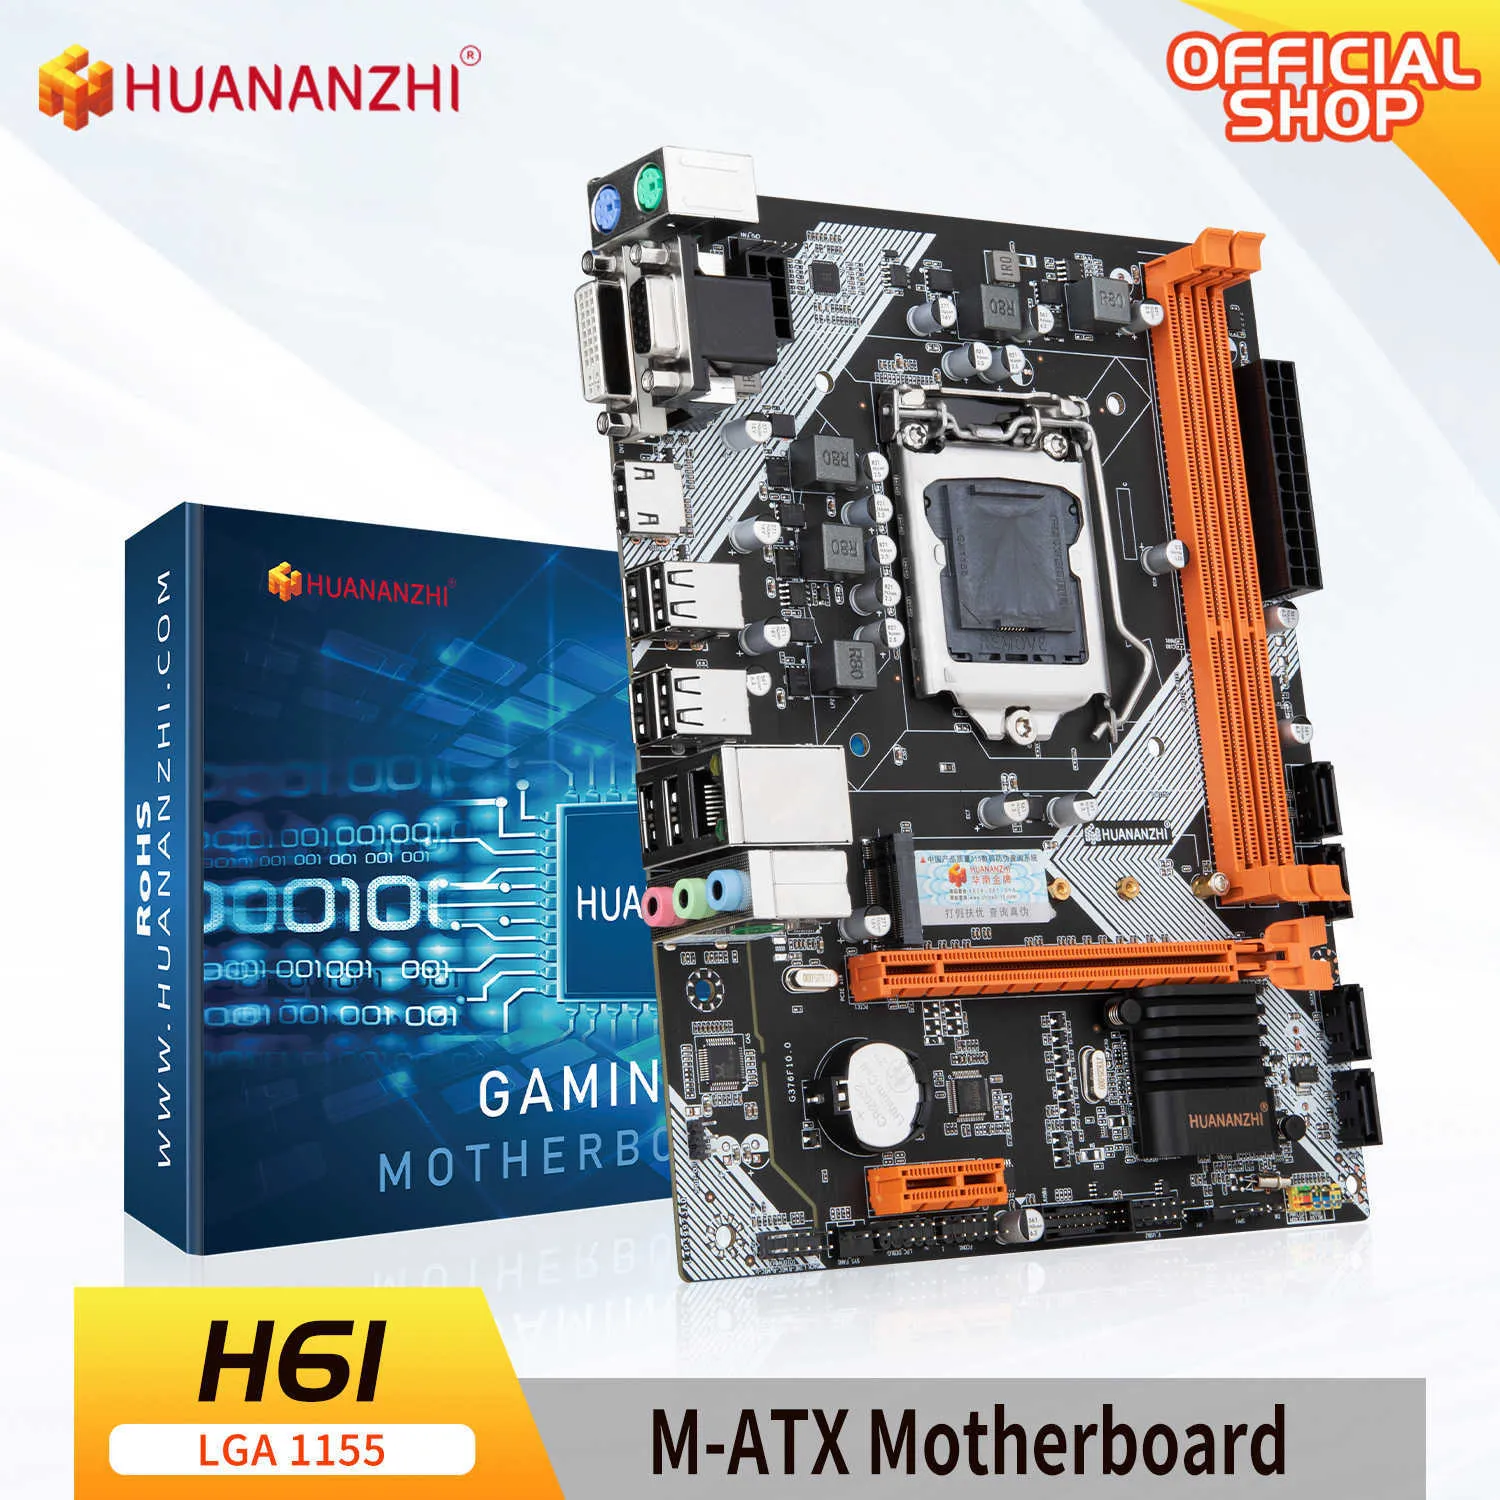 Huananzhi H61 Motherboard M-ATX لـ Intel LGA 1155 دعم I3 I5 I7 DDR3 1333/1600MHz 16GB SATA M.2 USB2.0 VGA HDMI متوافق